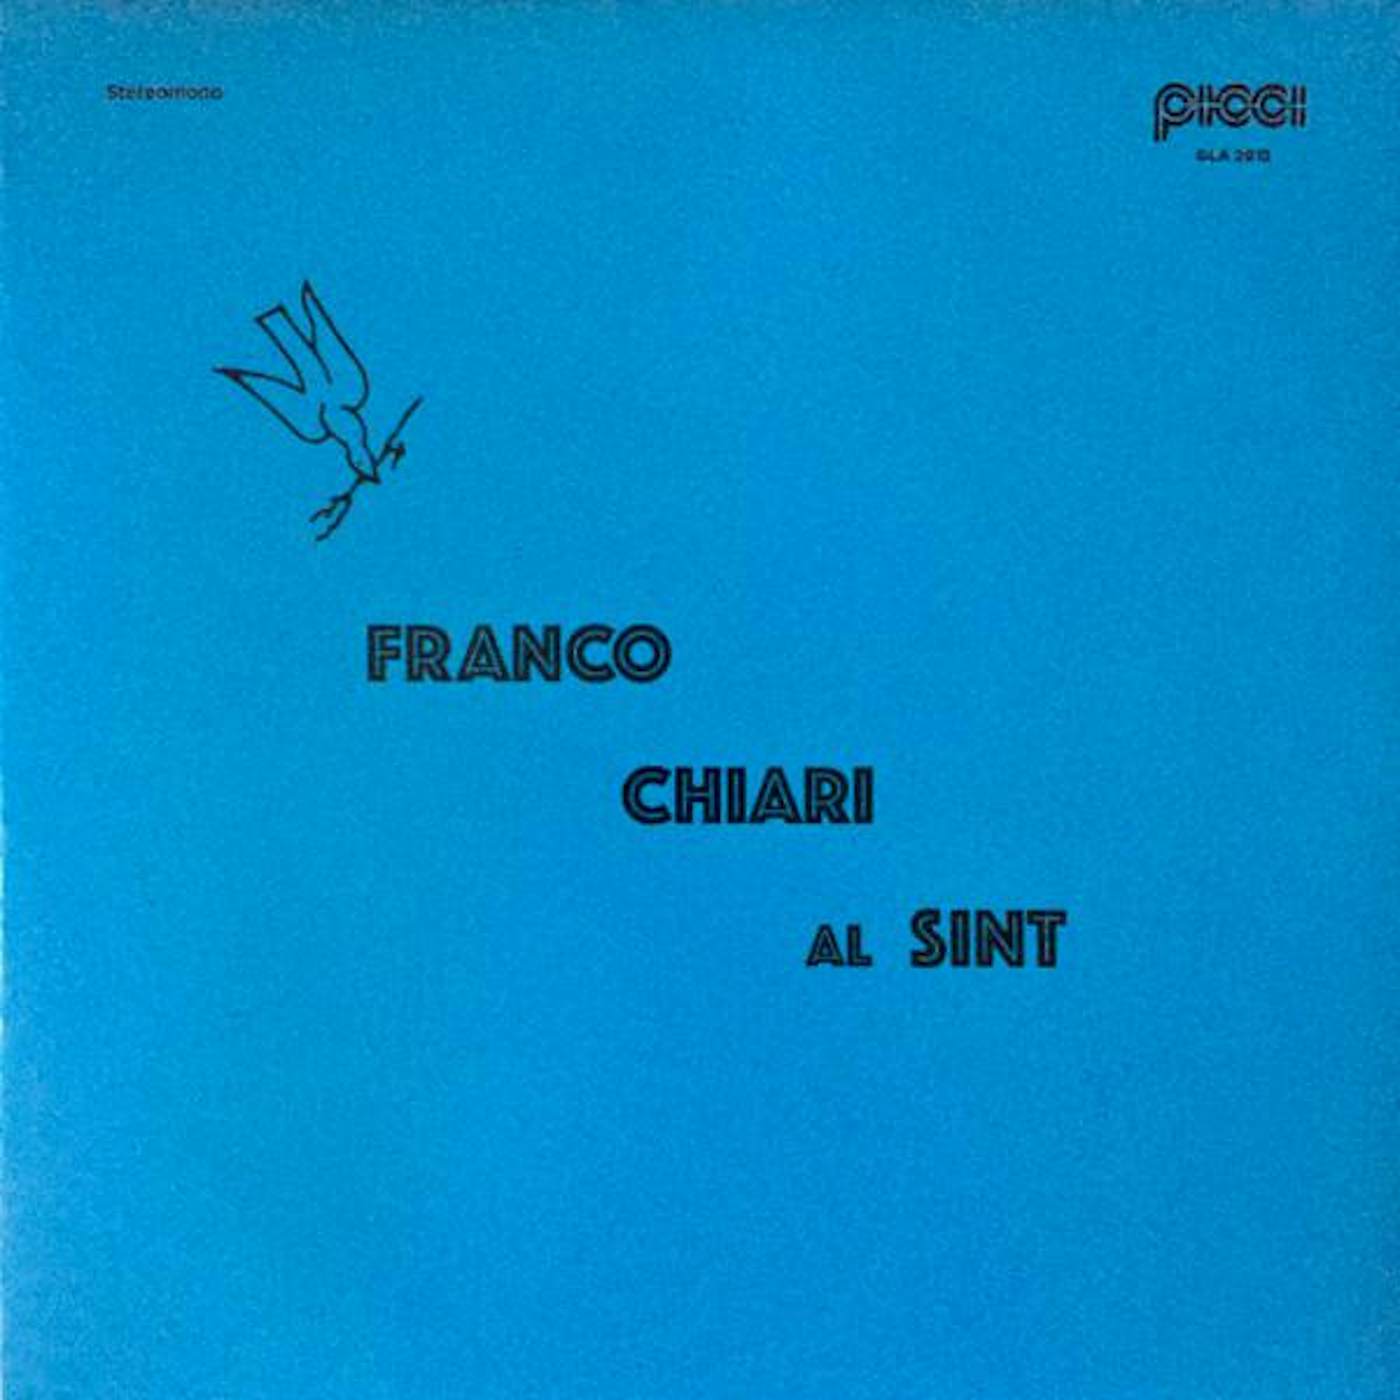 Franco Chiari AL SINT Vinyl Record - Italy Release